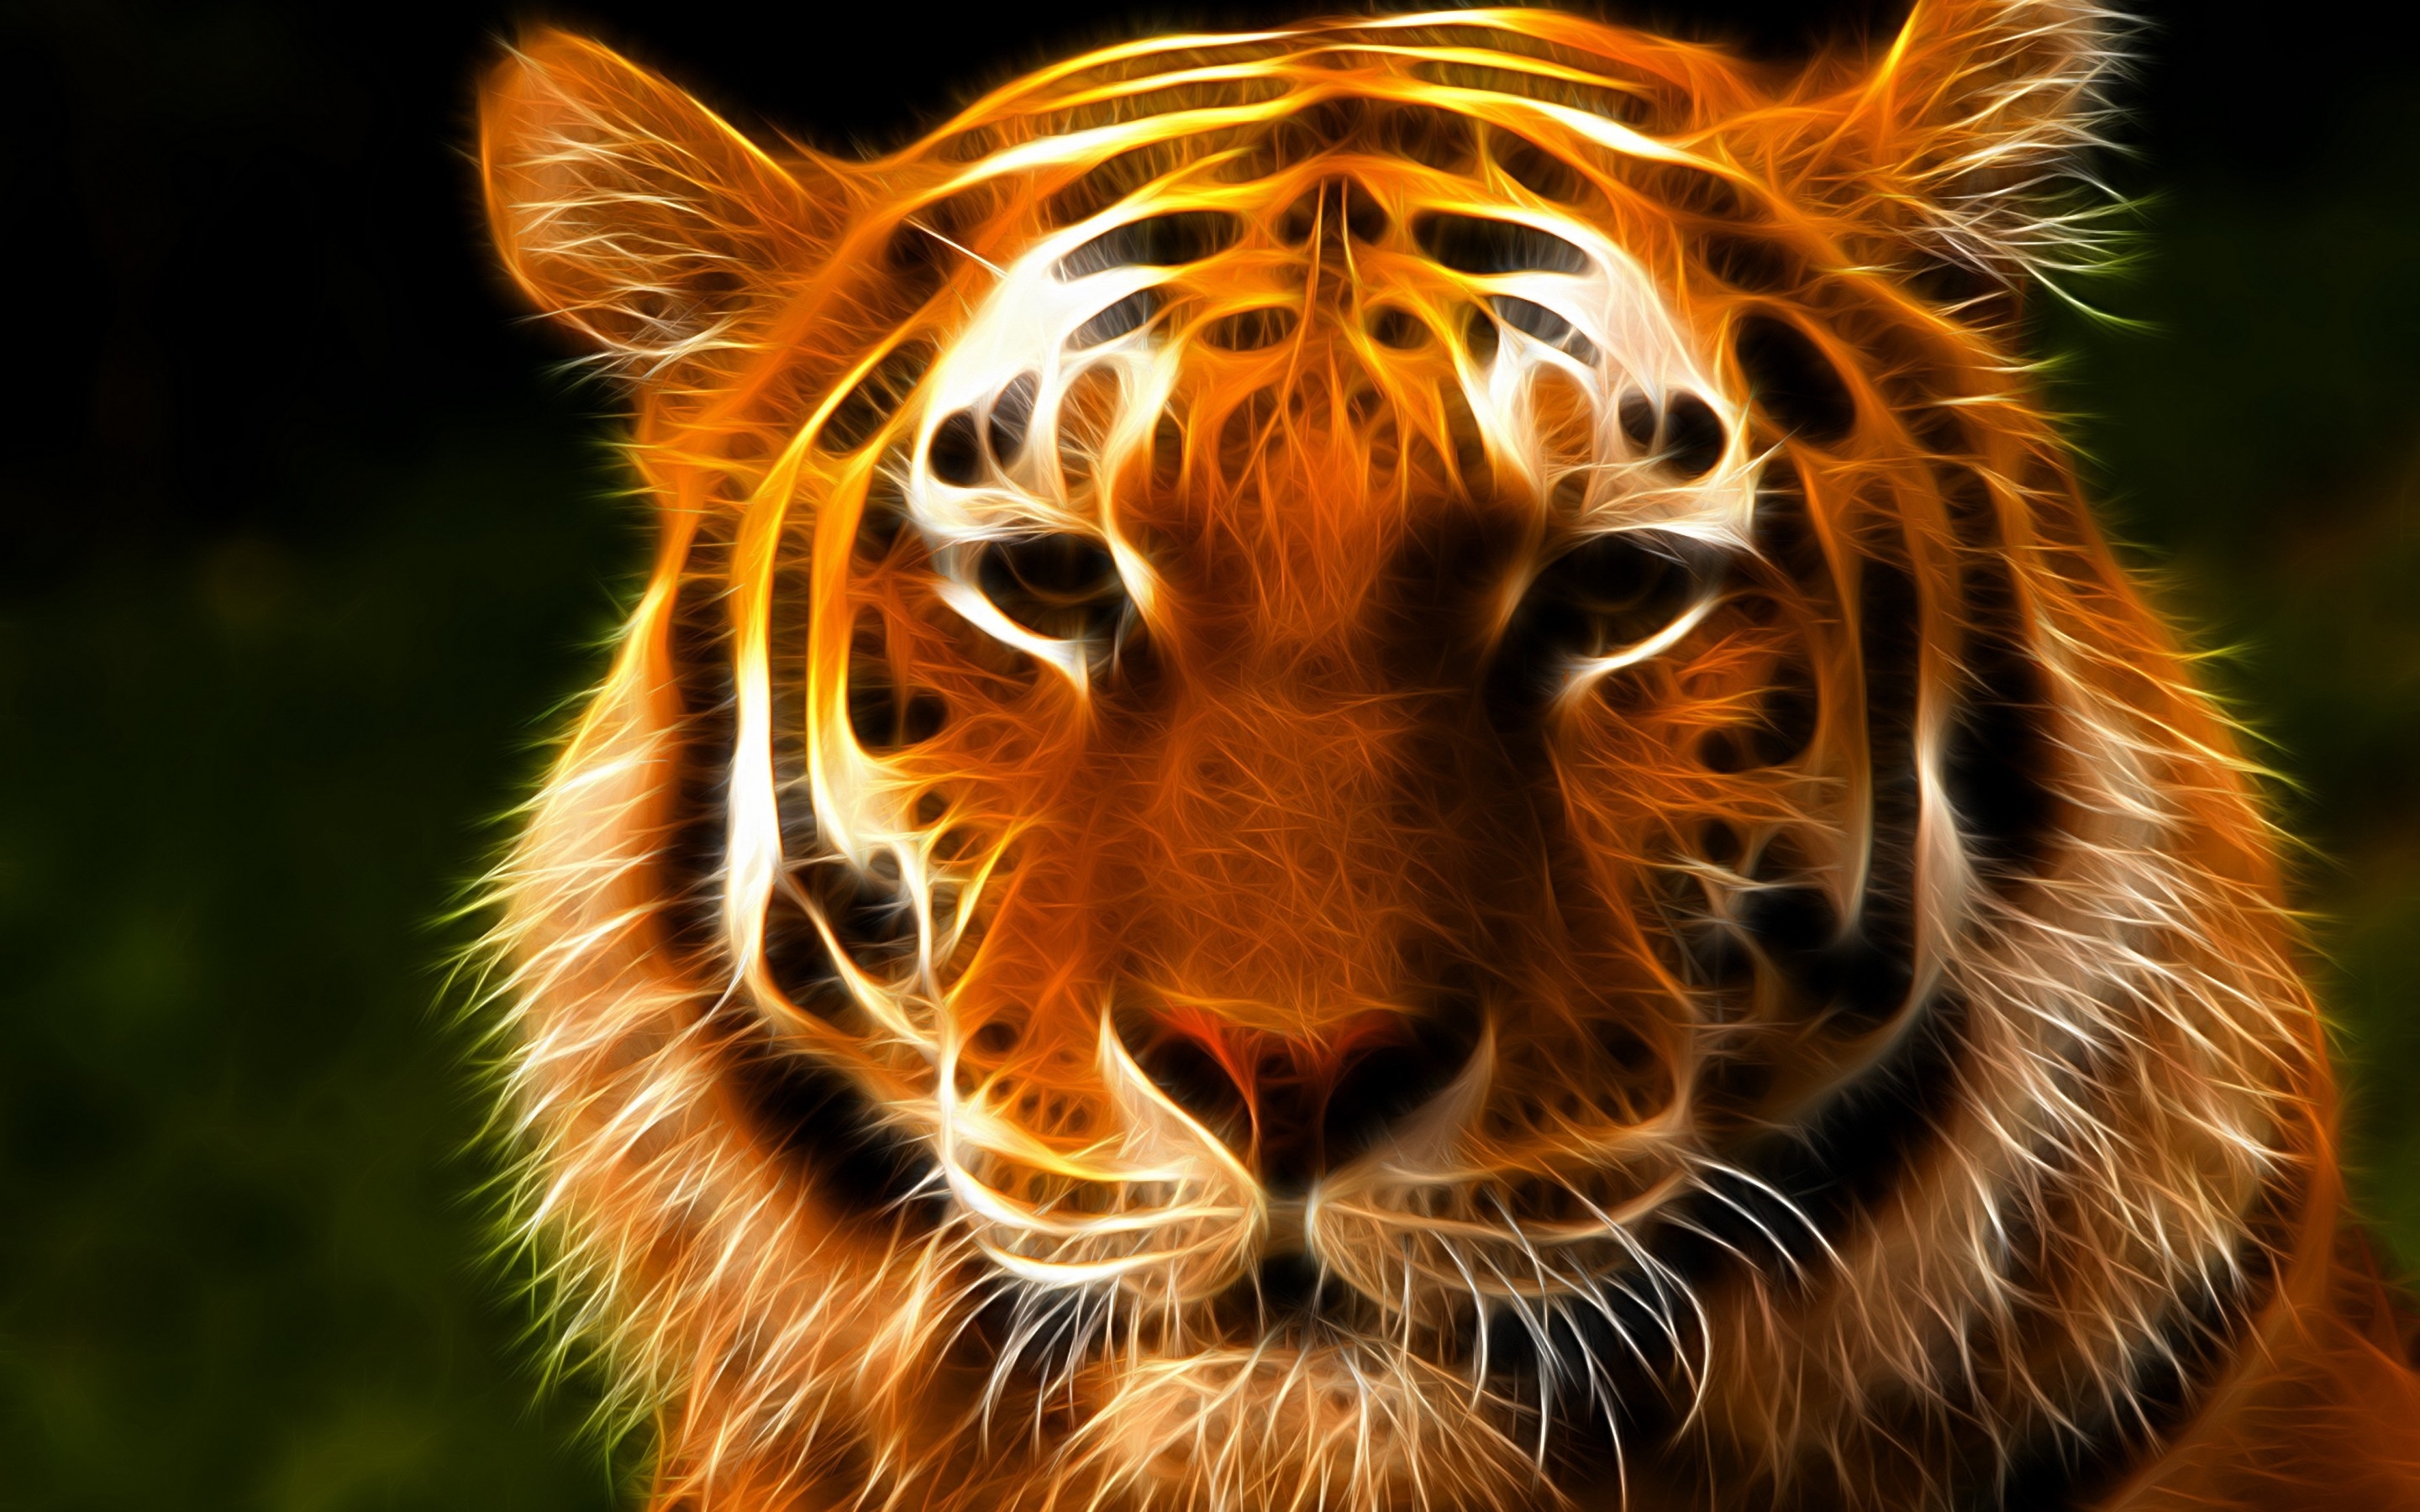 Tiger Face Art for 2880 x 1800 Retina Display resolution